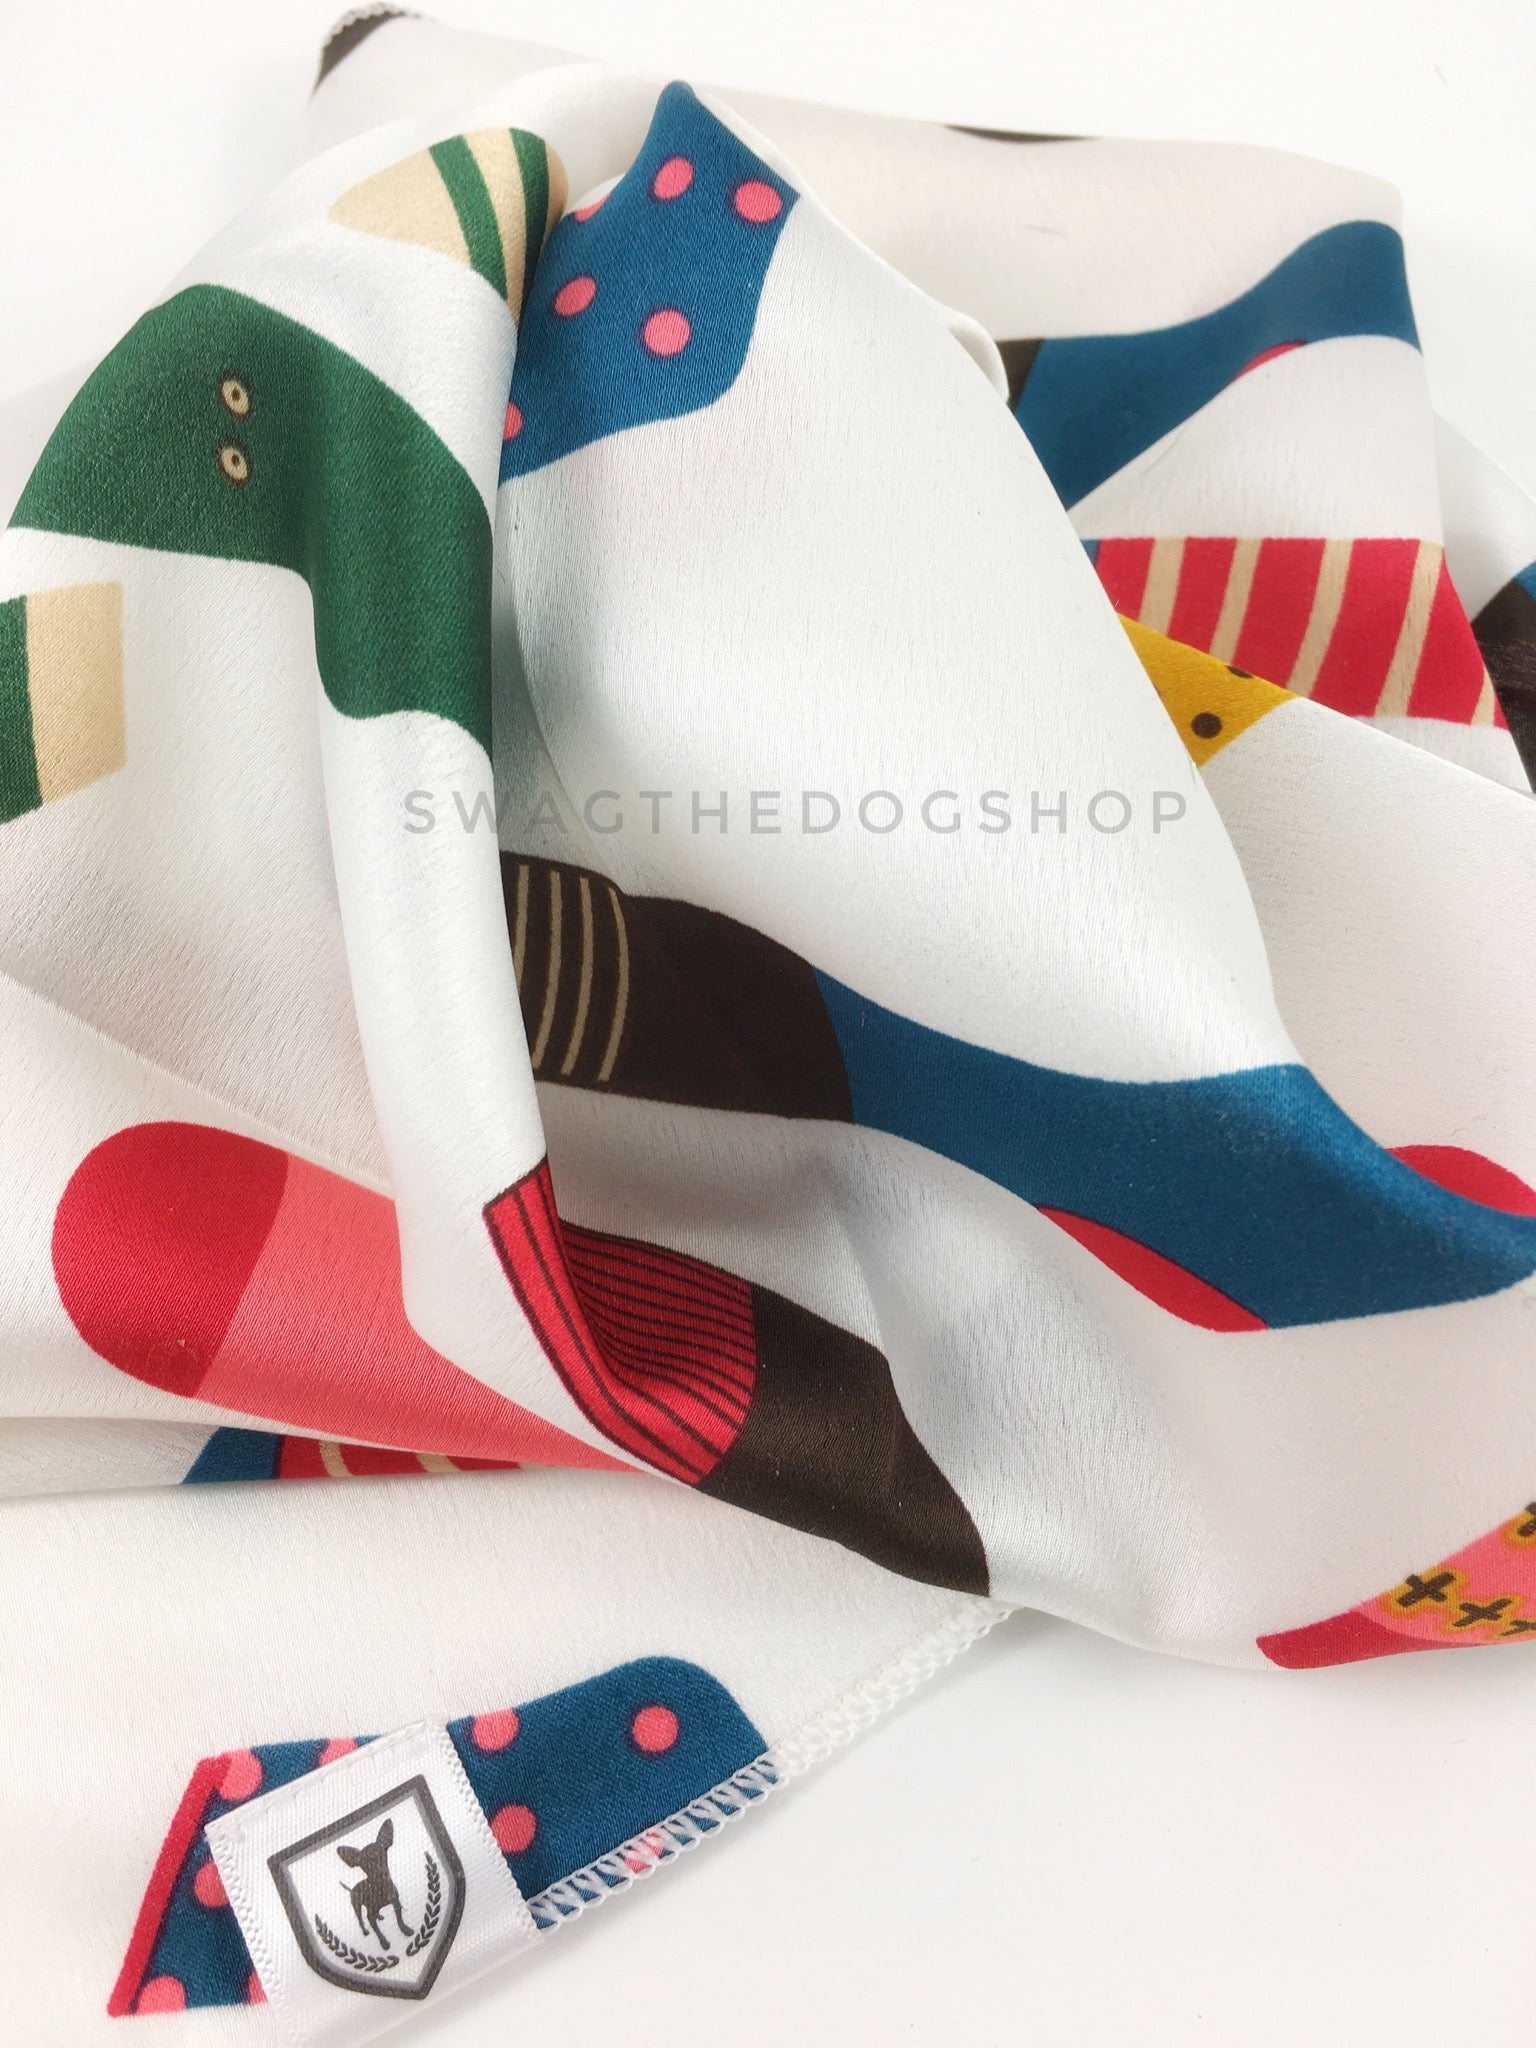 Rock Your Socks Swagdana Scarf - Close-up View of Product. Dog Bandana. Dog Scarf.